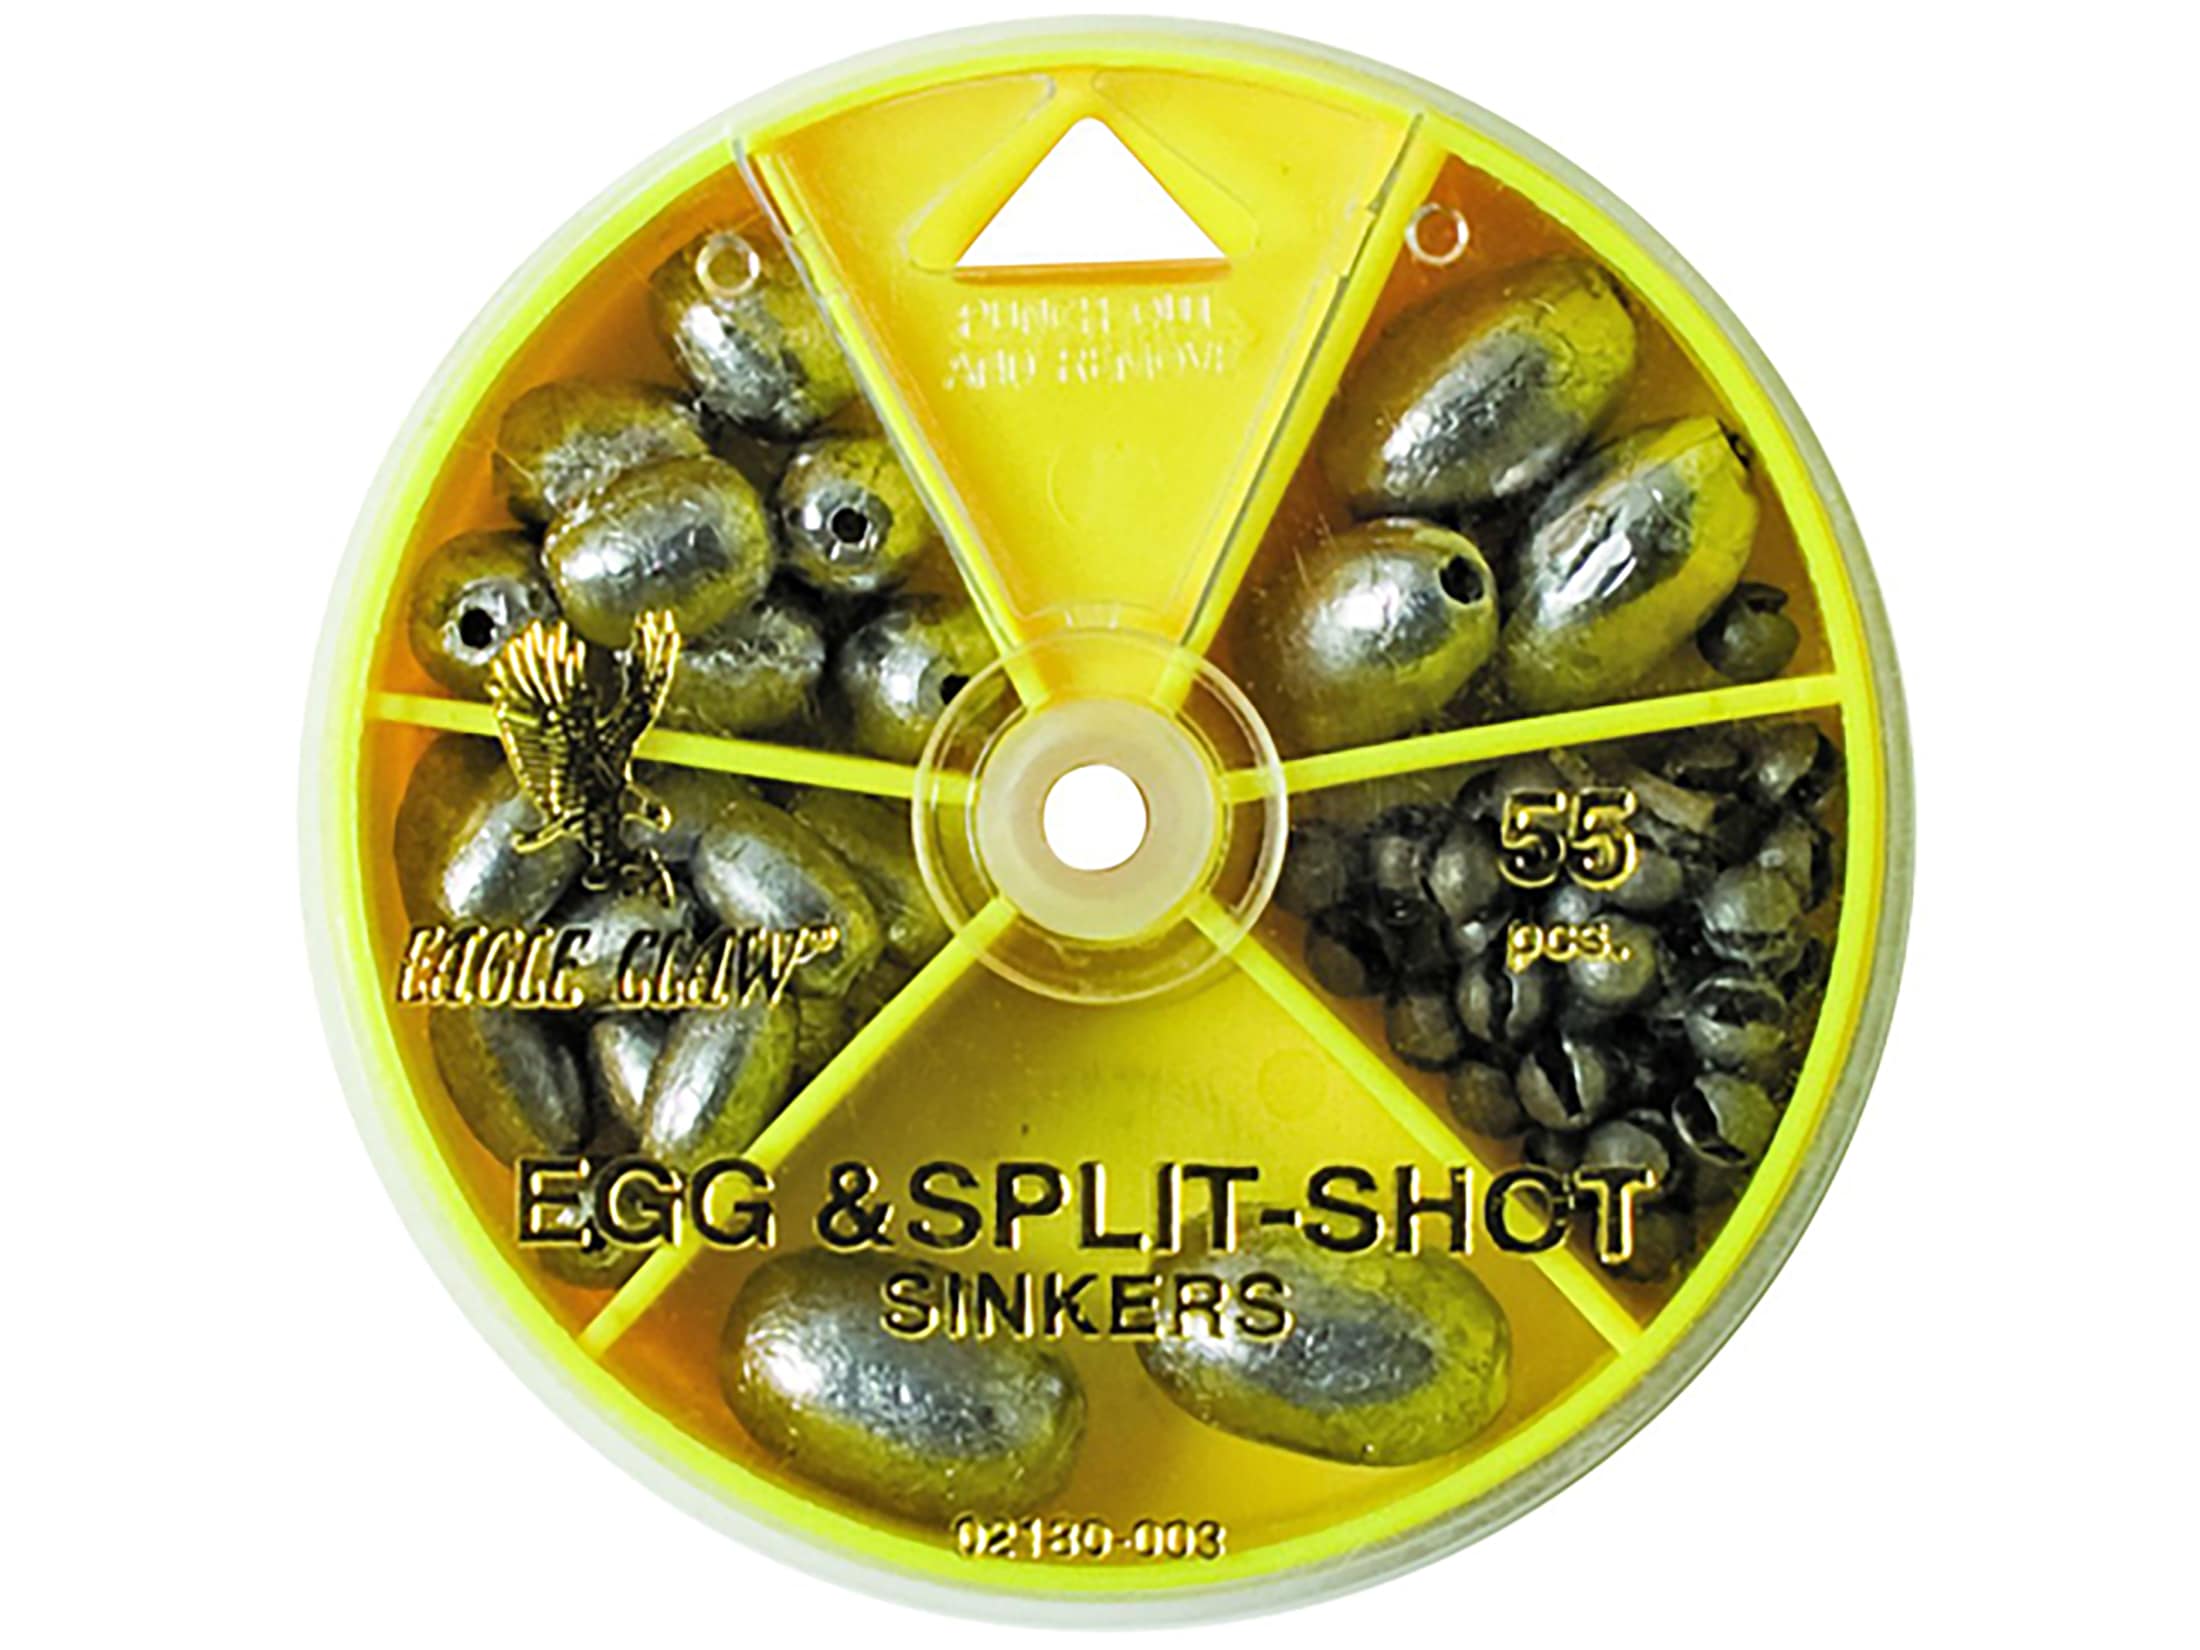 Eagle Claw Egg & Split-Shot Sinker Assortment